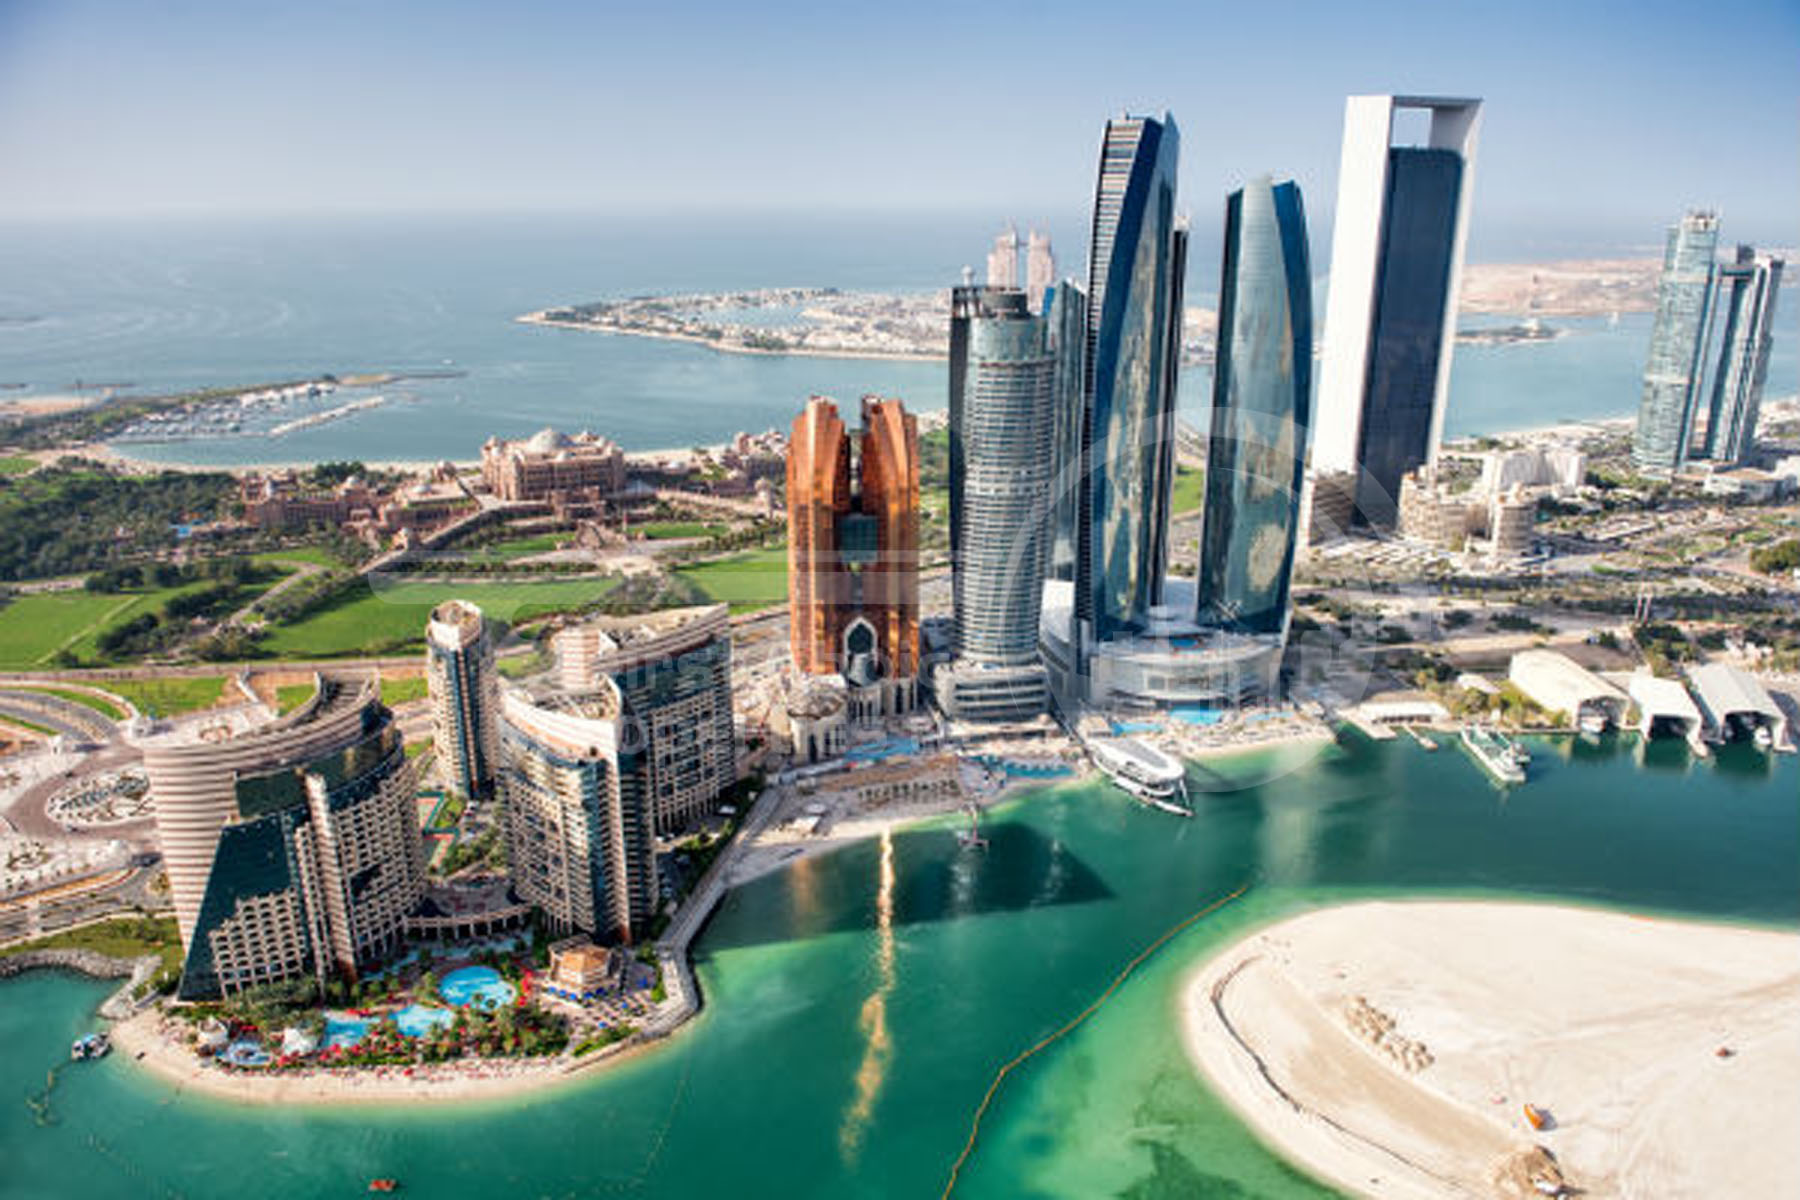 Residential Island - Nareel Island - Al Bateen - Abu Dhabi - UAE (7).jpg